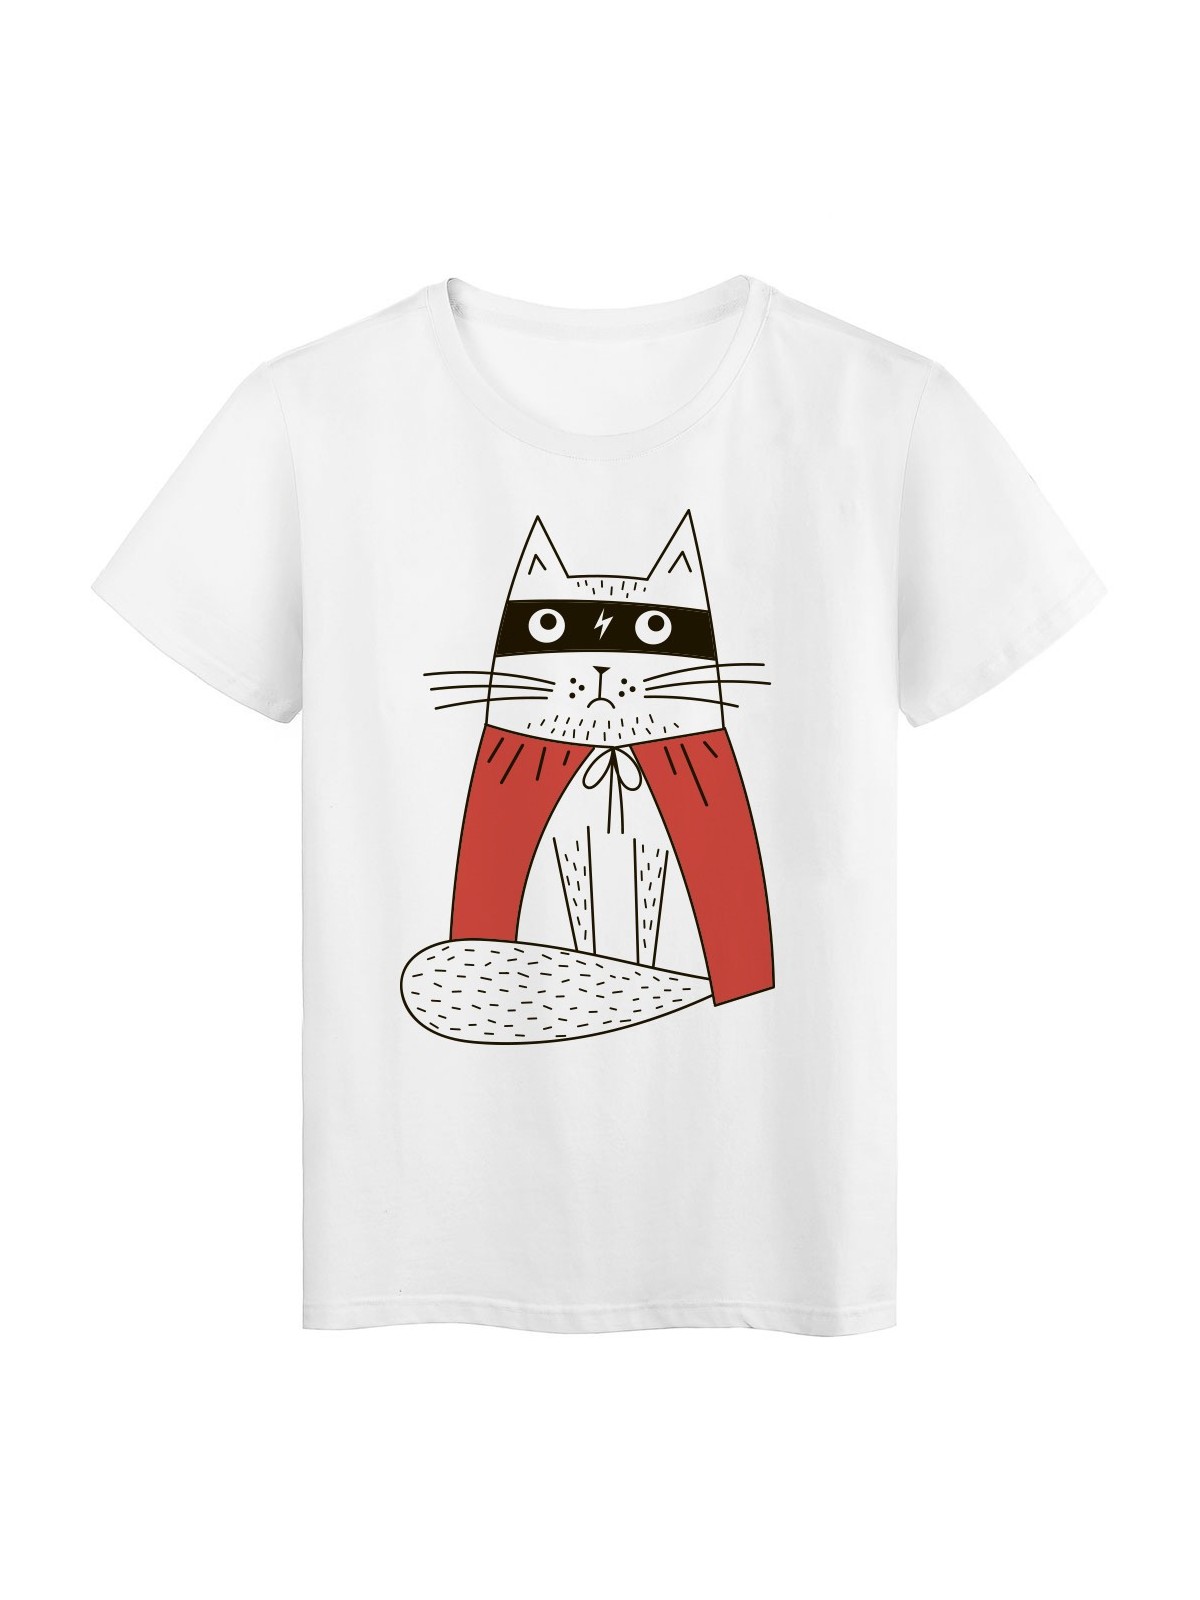 T-Shirt blanc Design Chat masque cape rouge super hÃ©ros rÃ©f tee shirt 2182